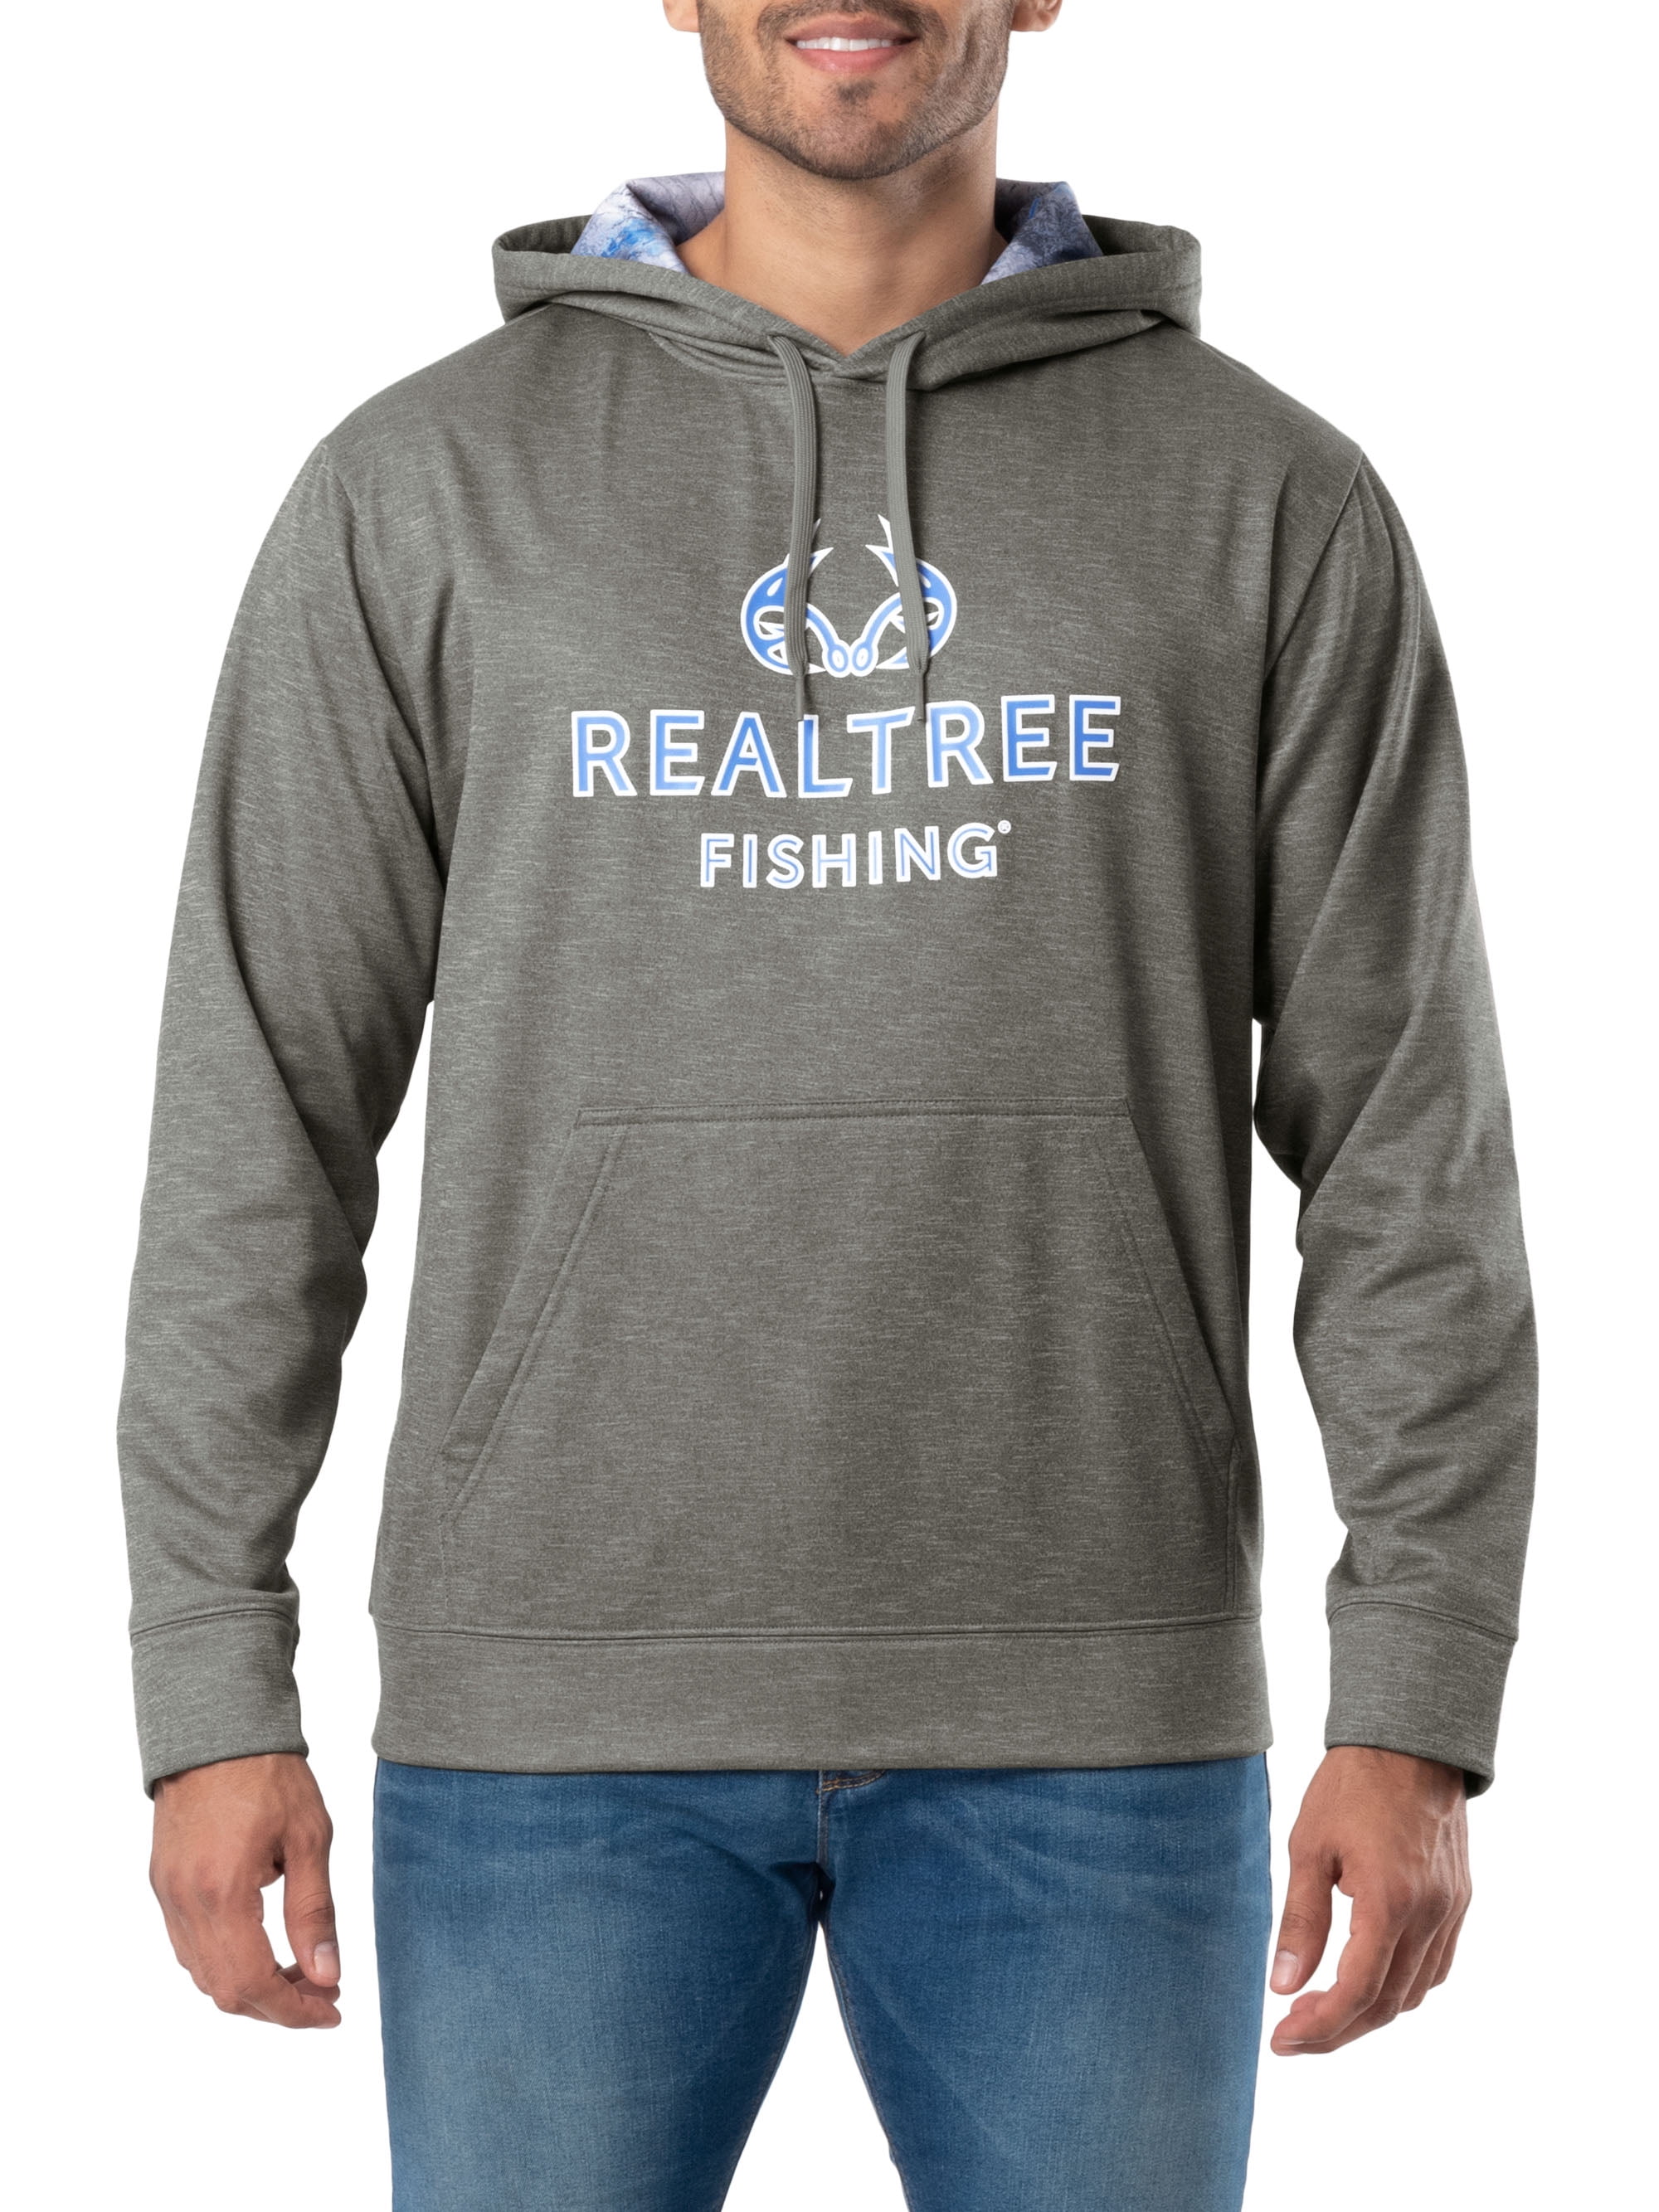 Realtree Fishing Men's Logo Performance Hoodie, Size: Small, Gray